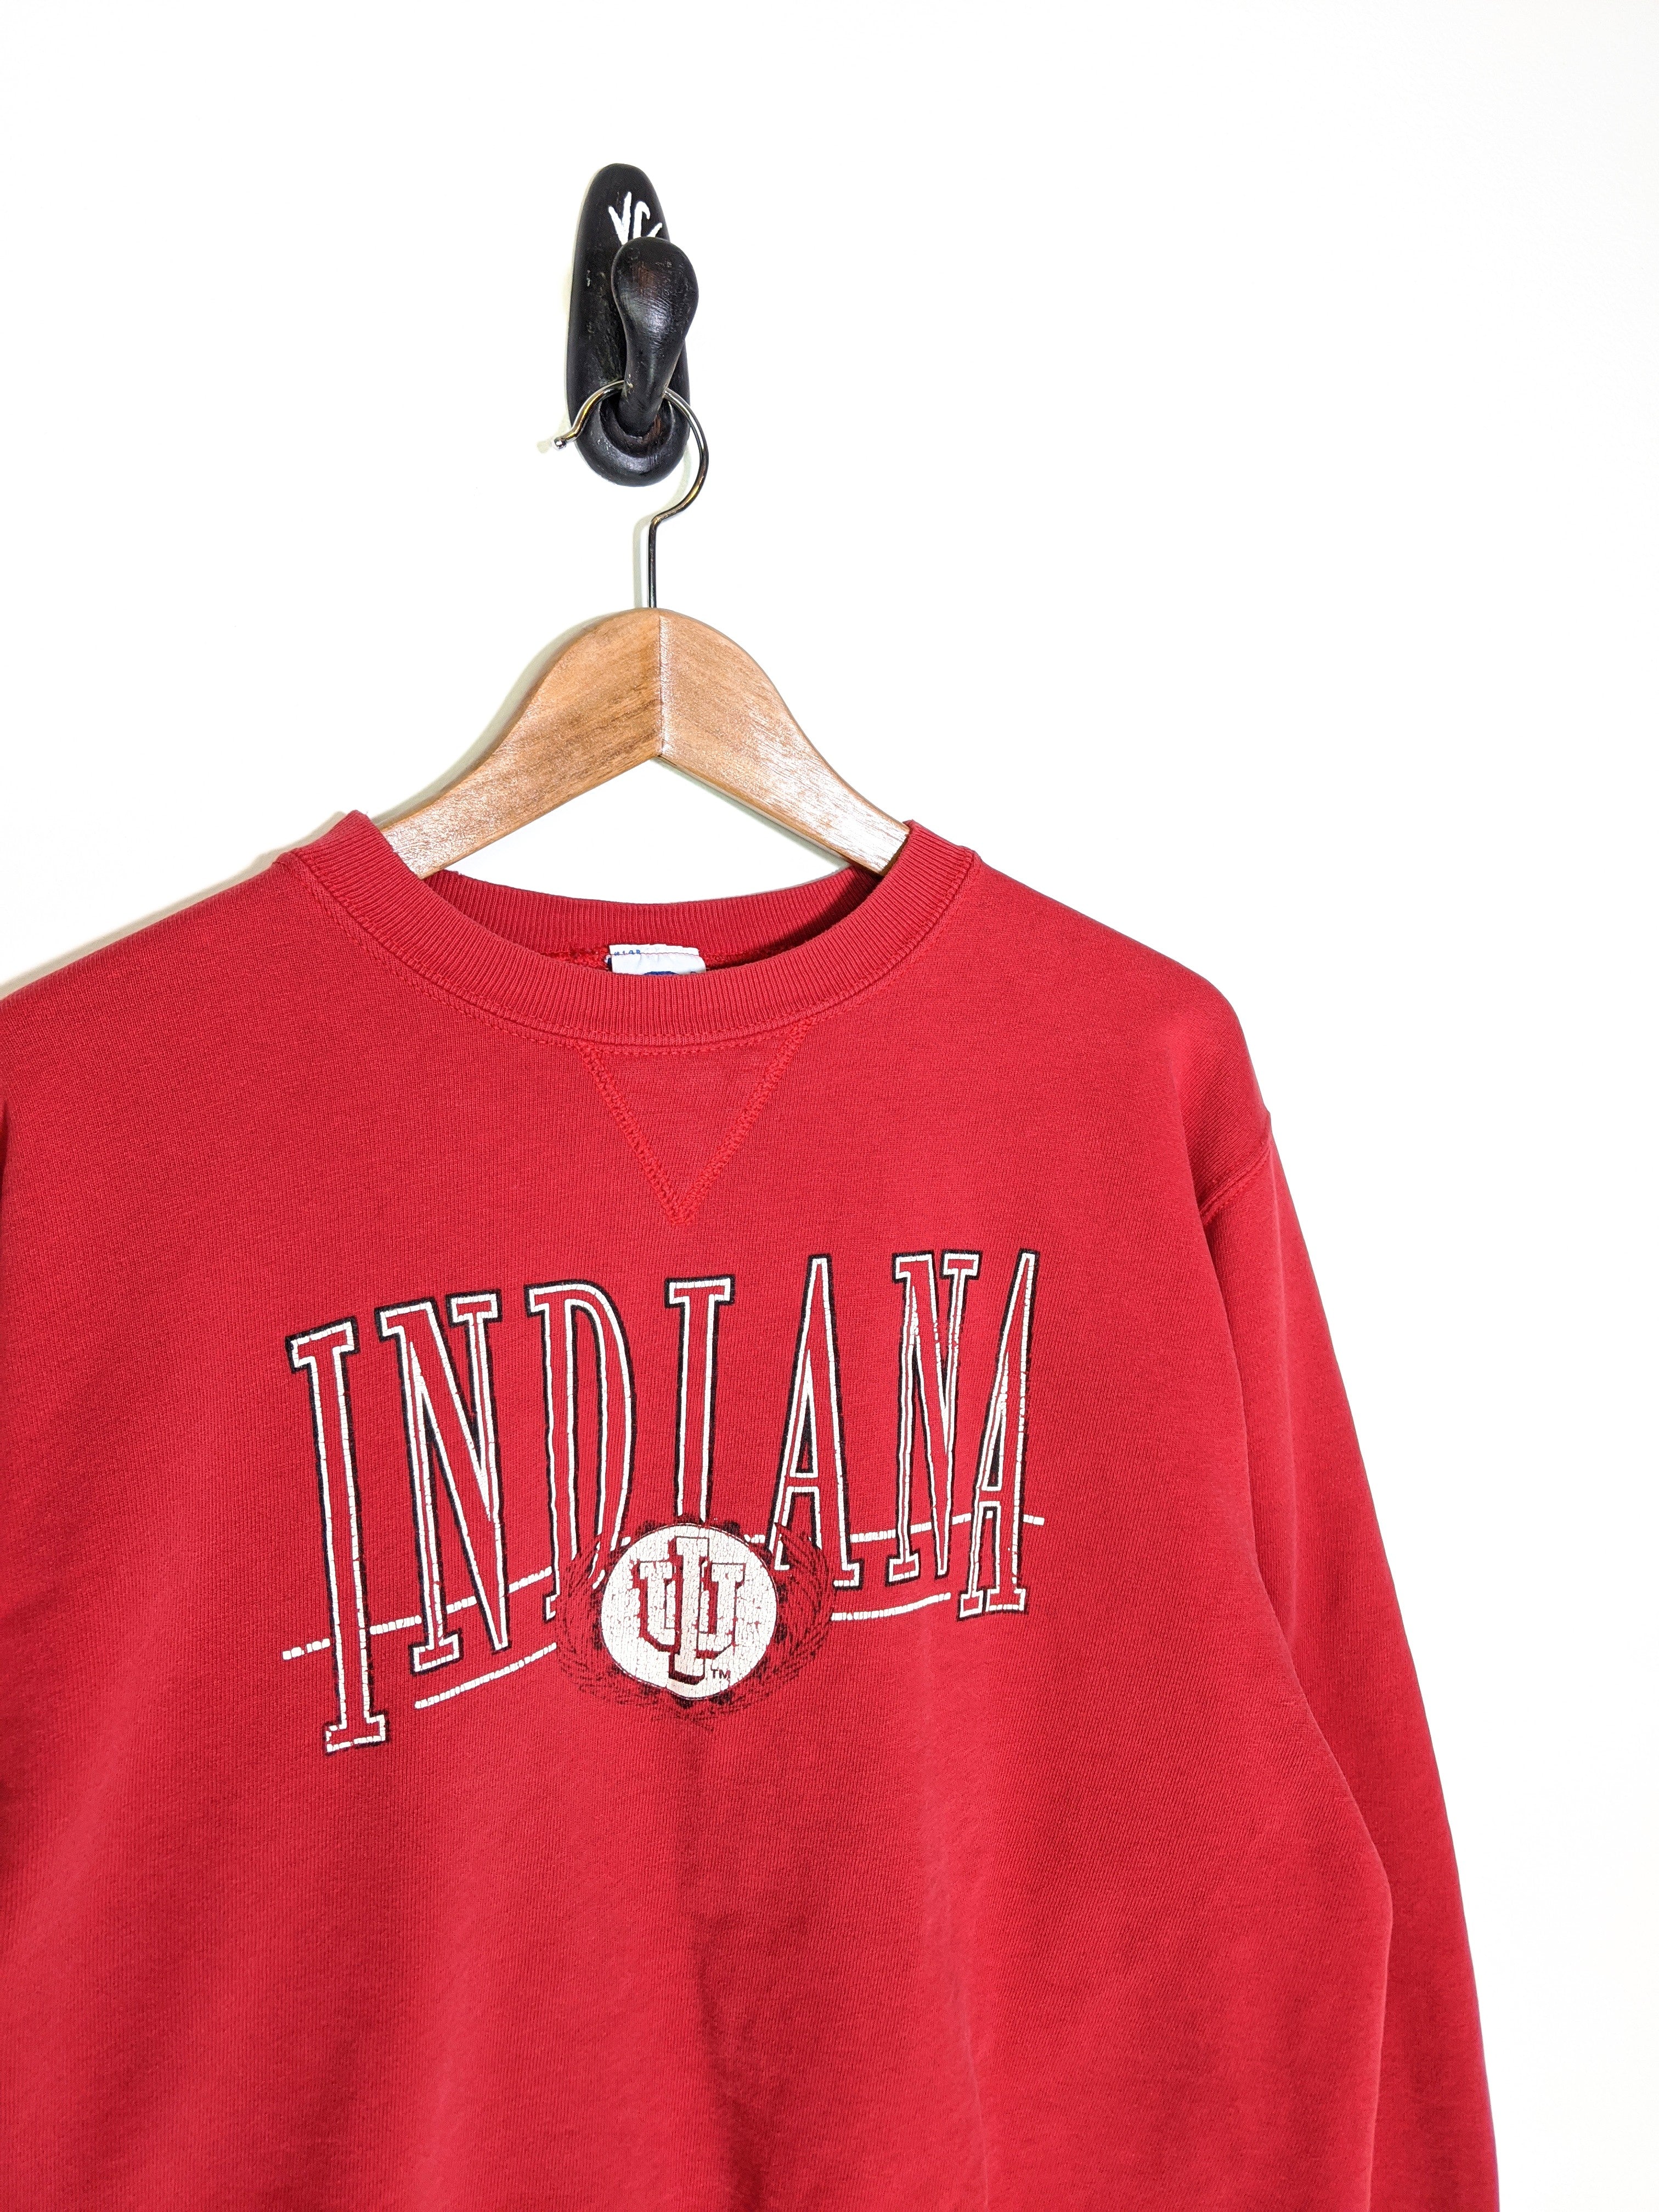 Vintage Indiana University Sweatshirt (L)